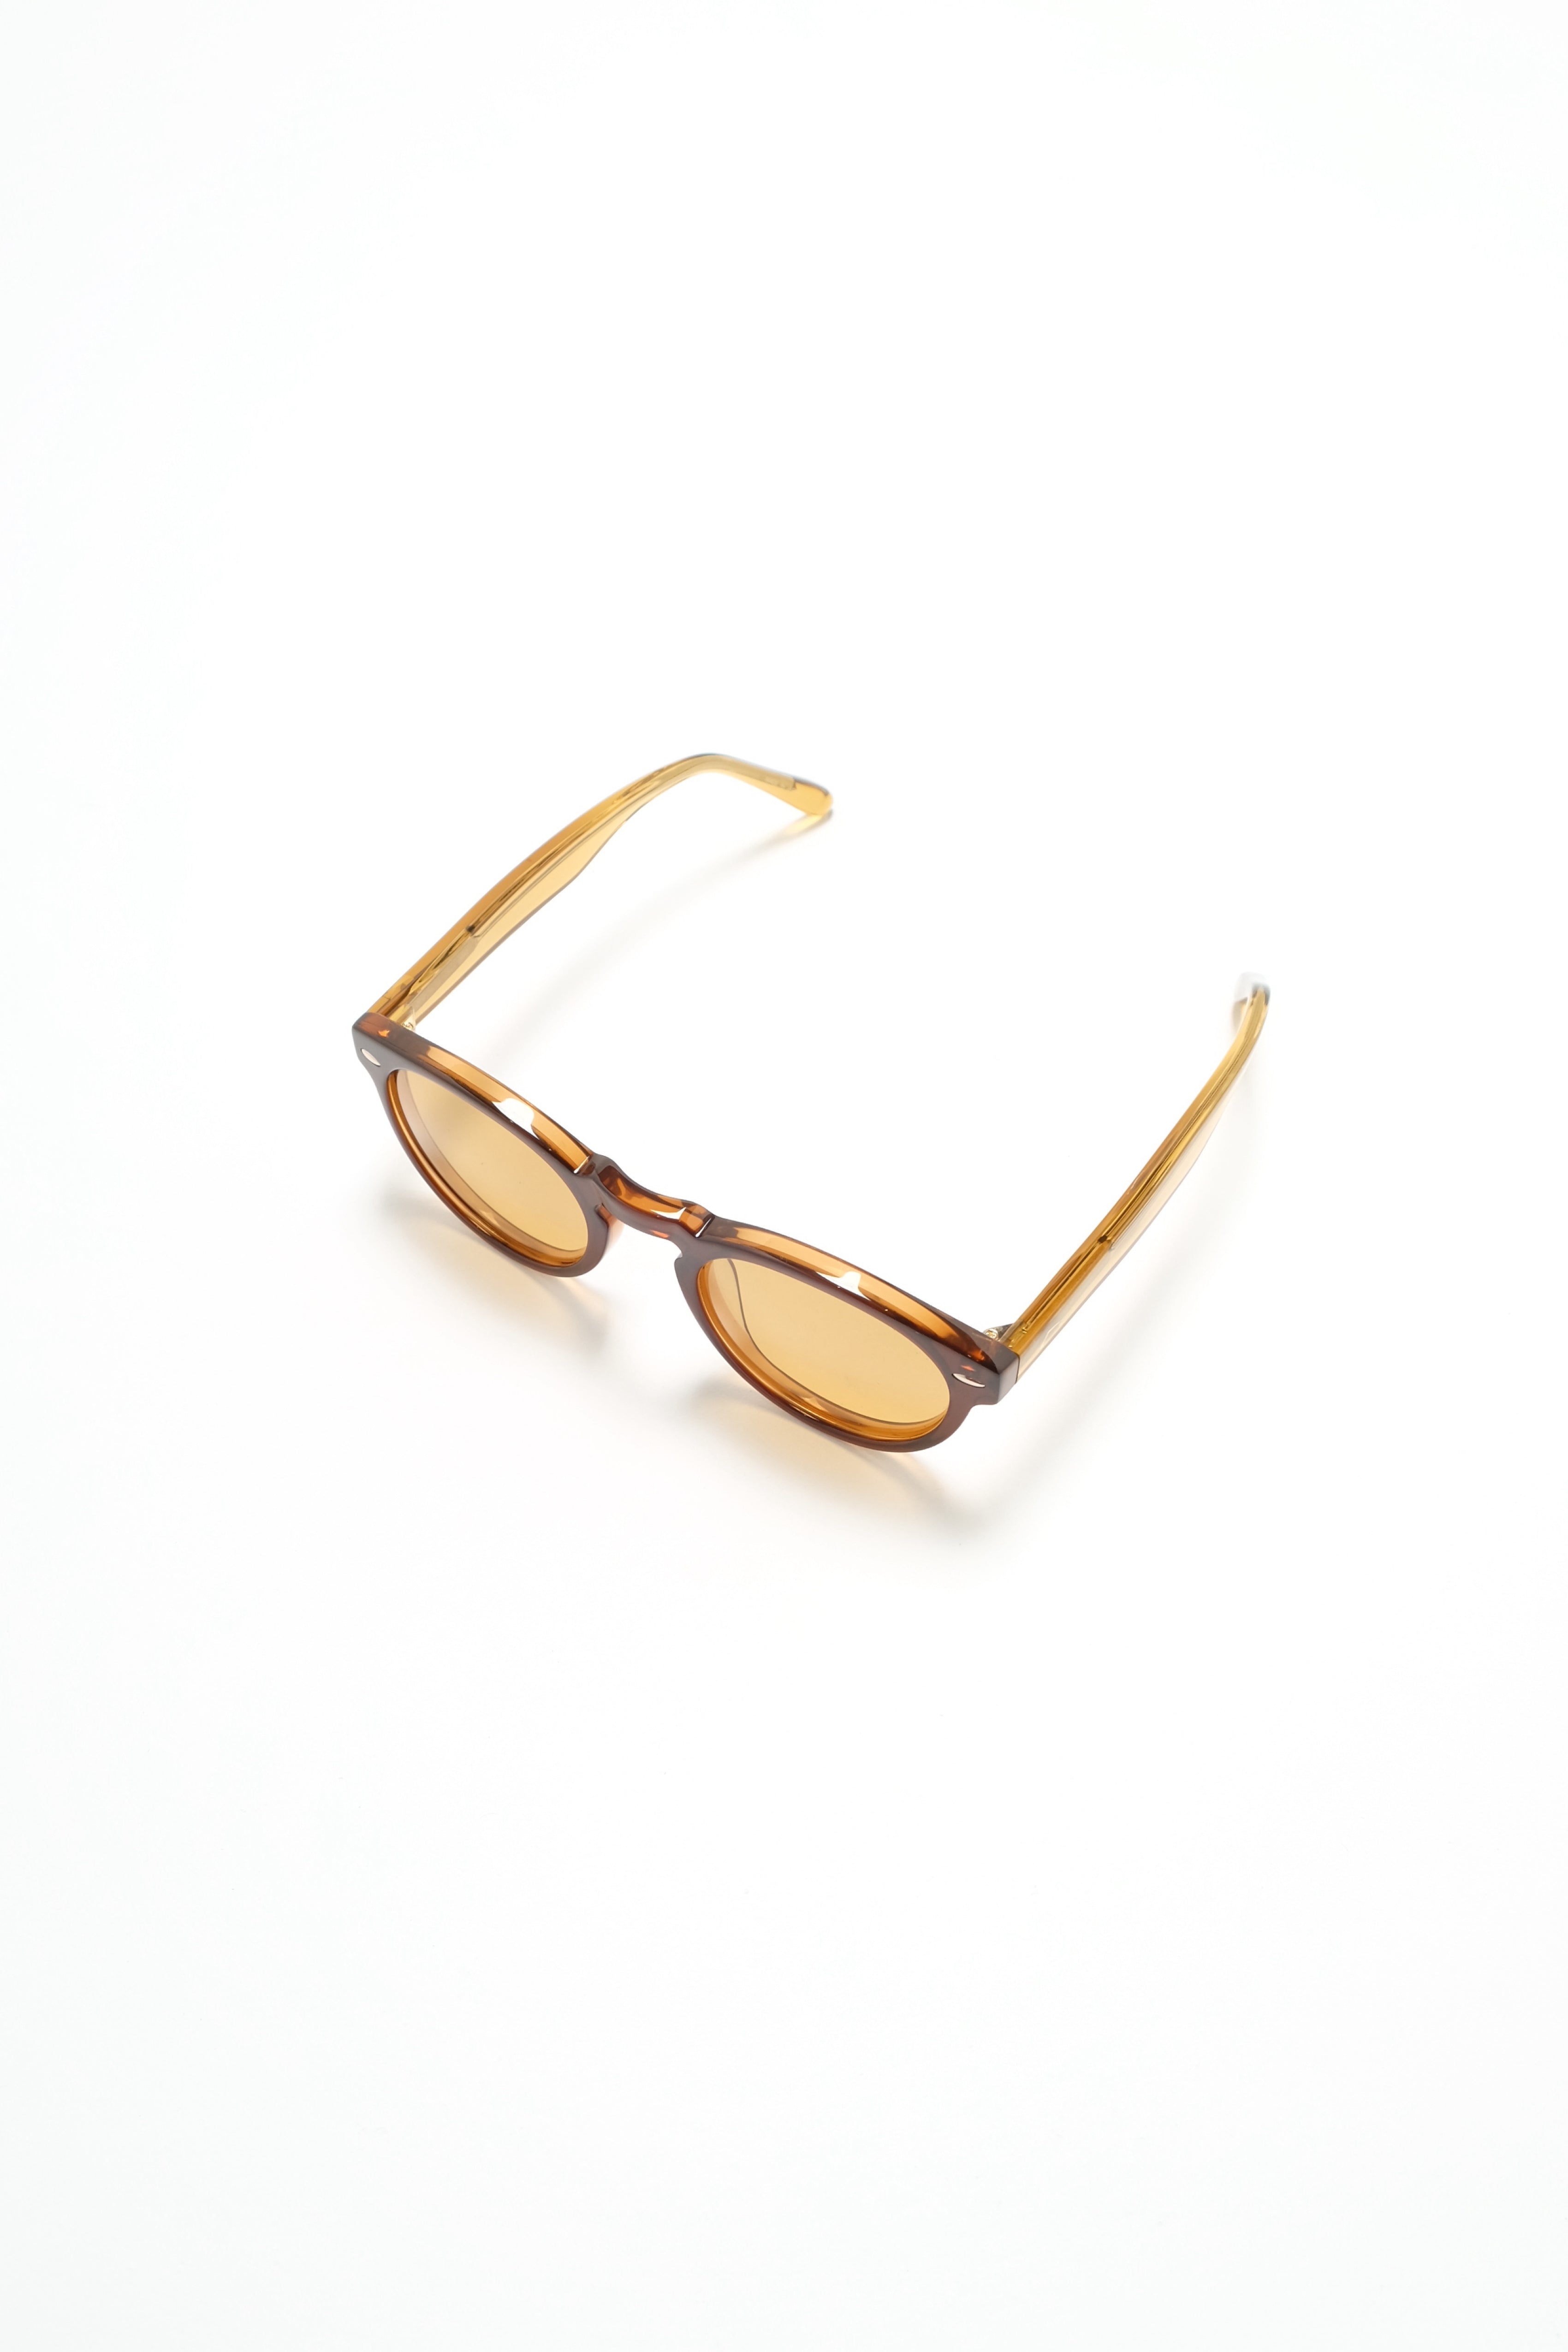 Sunglasses - Nui - Brown/Brown Lens